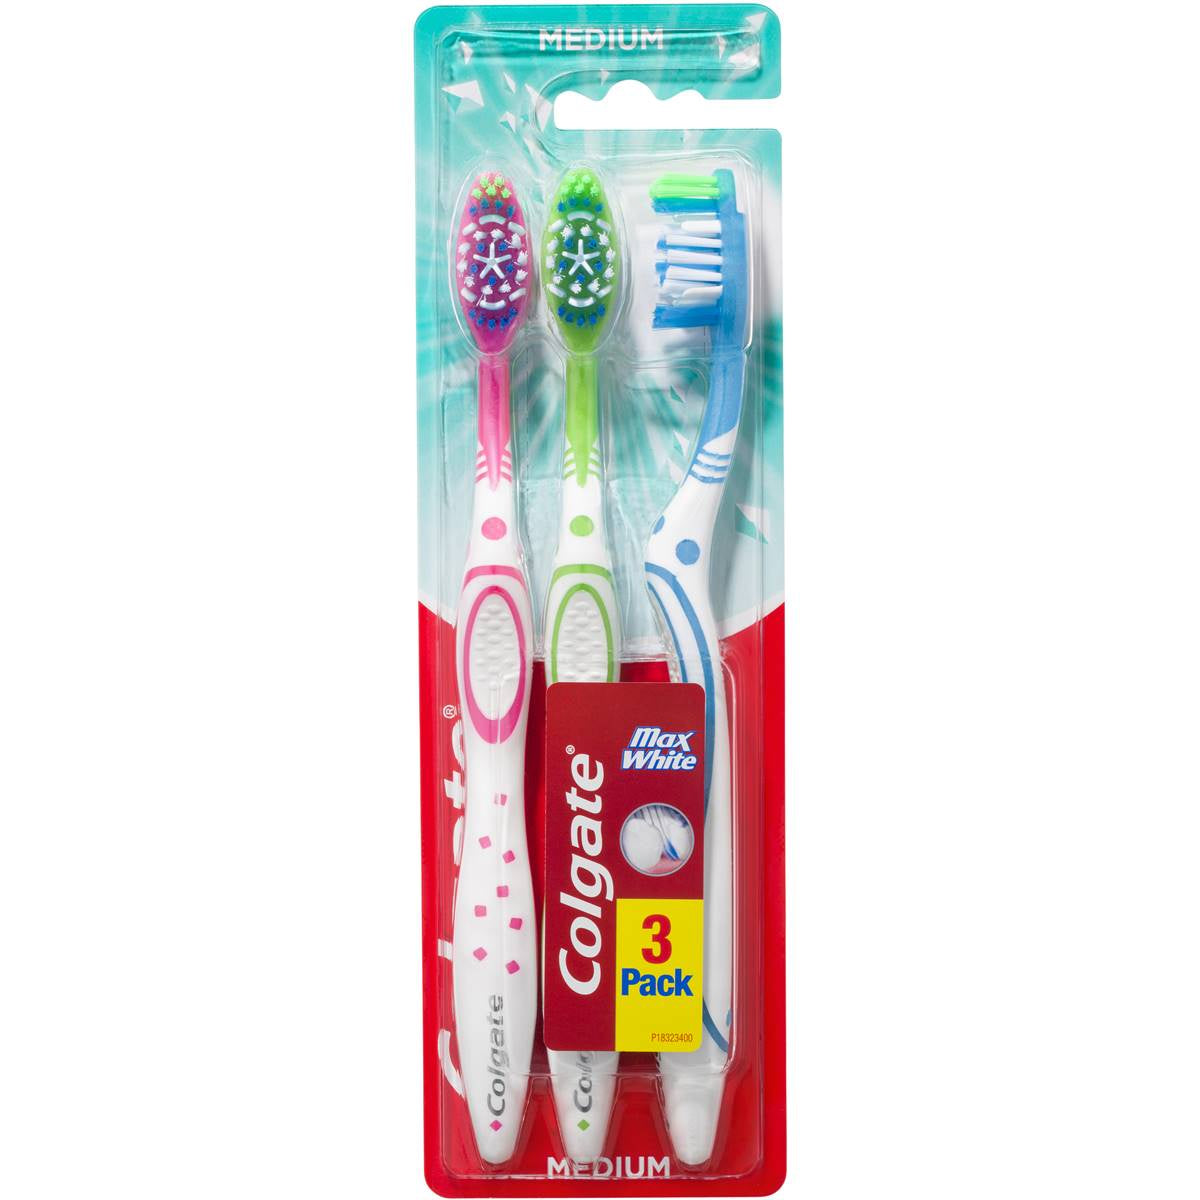 Colgate Toothbrush Max White Medium Bristles 3 Pack